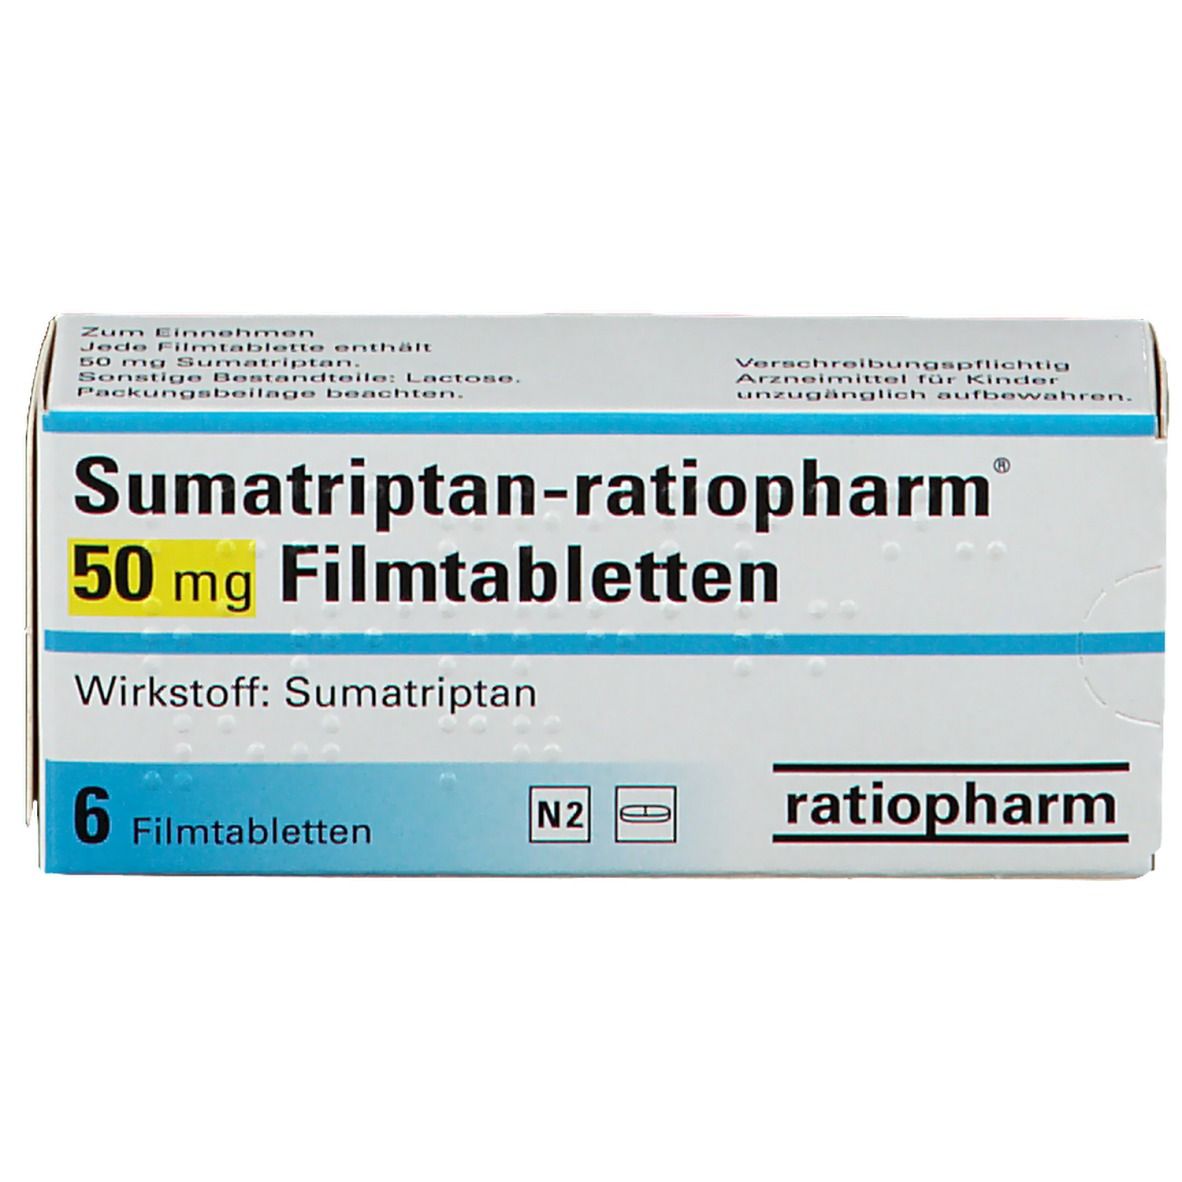 Sumatriptan-ratiopharm® 50 mg